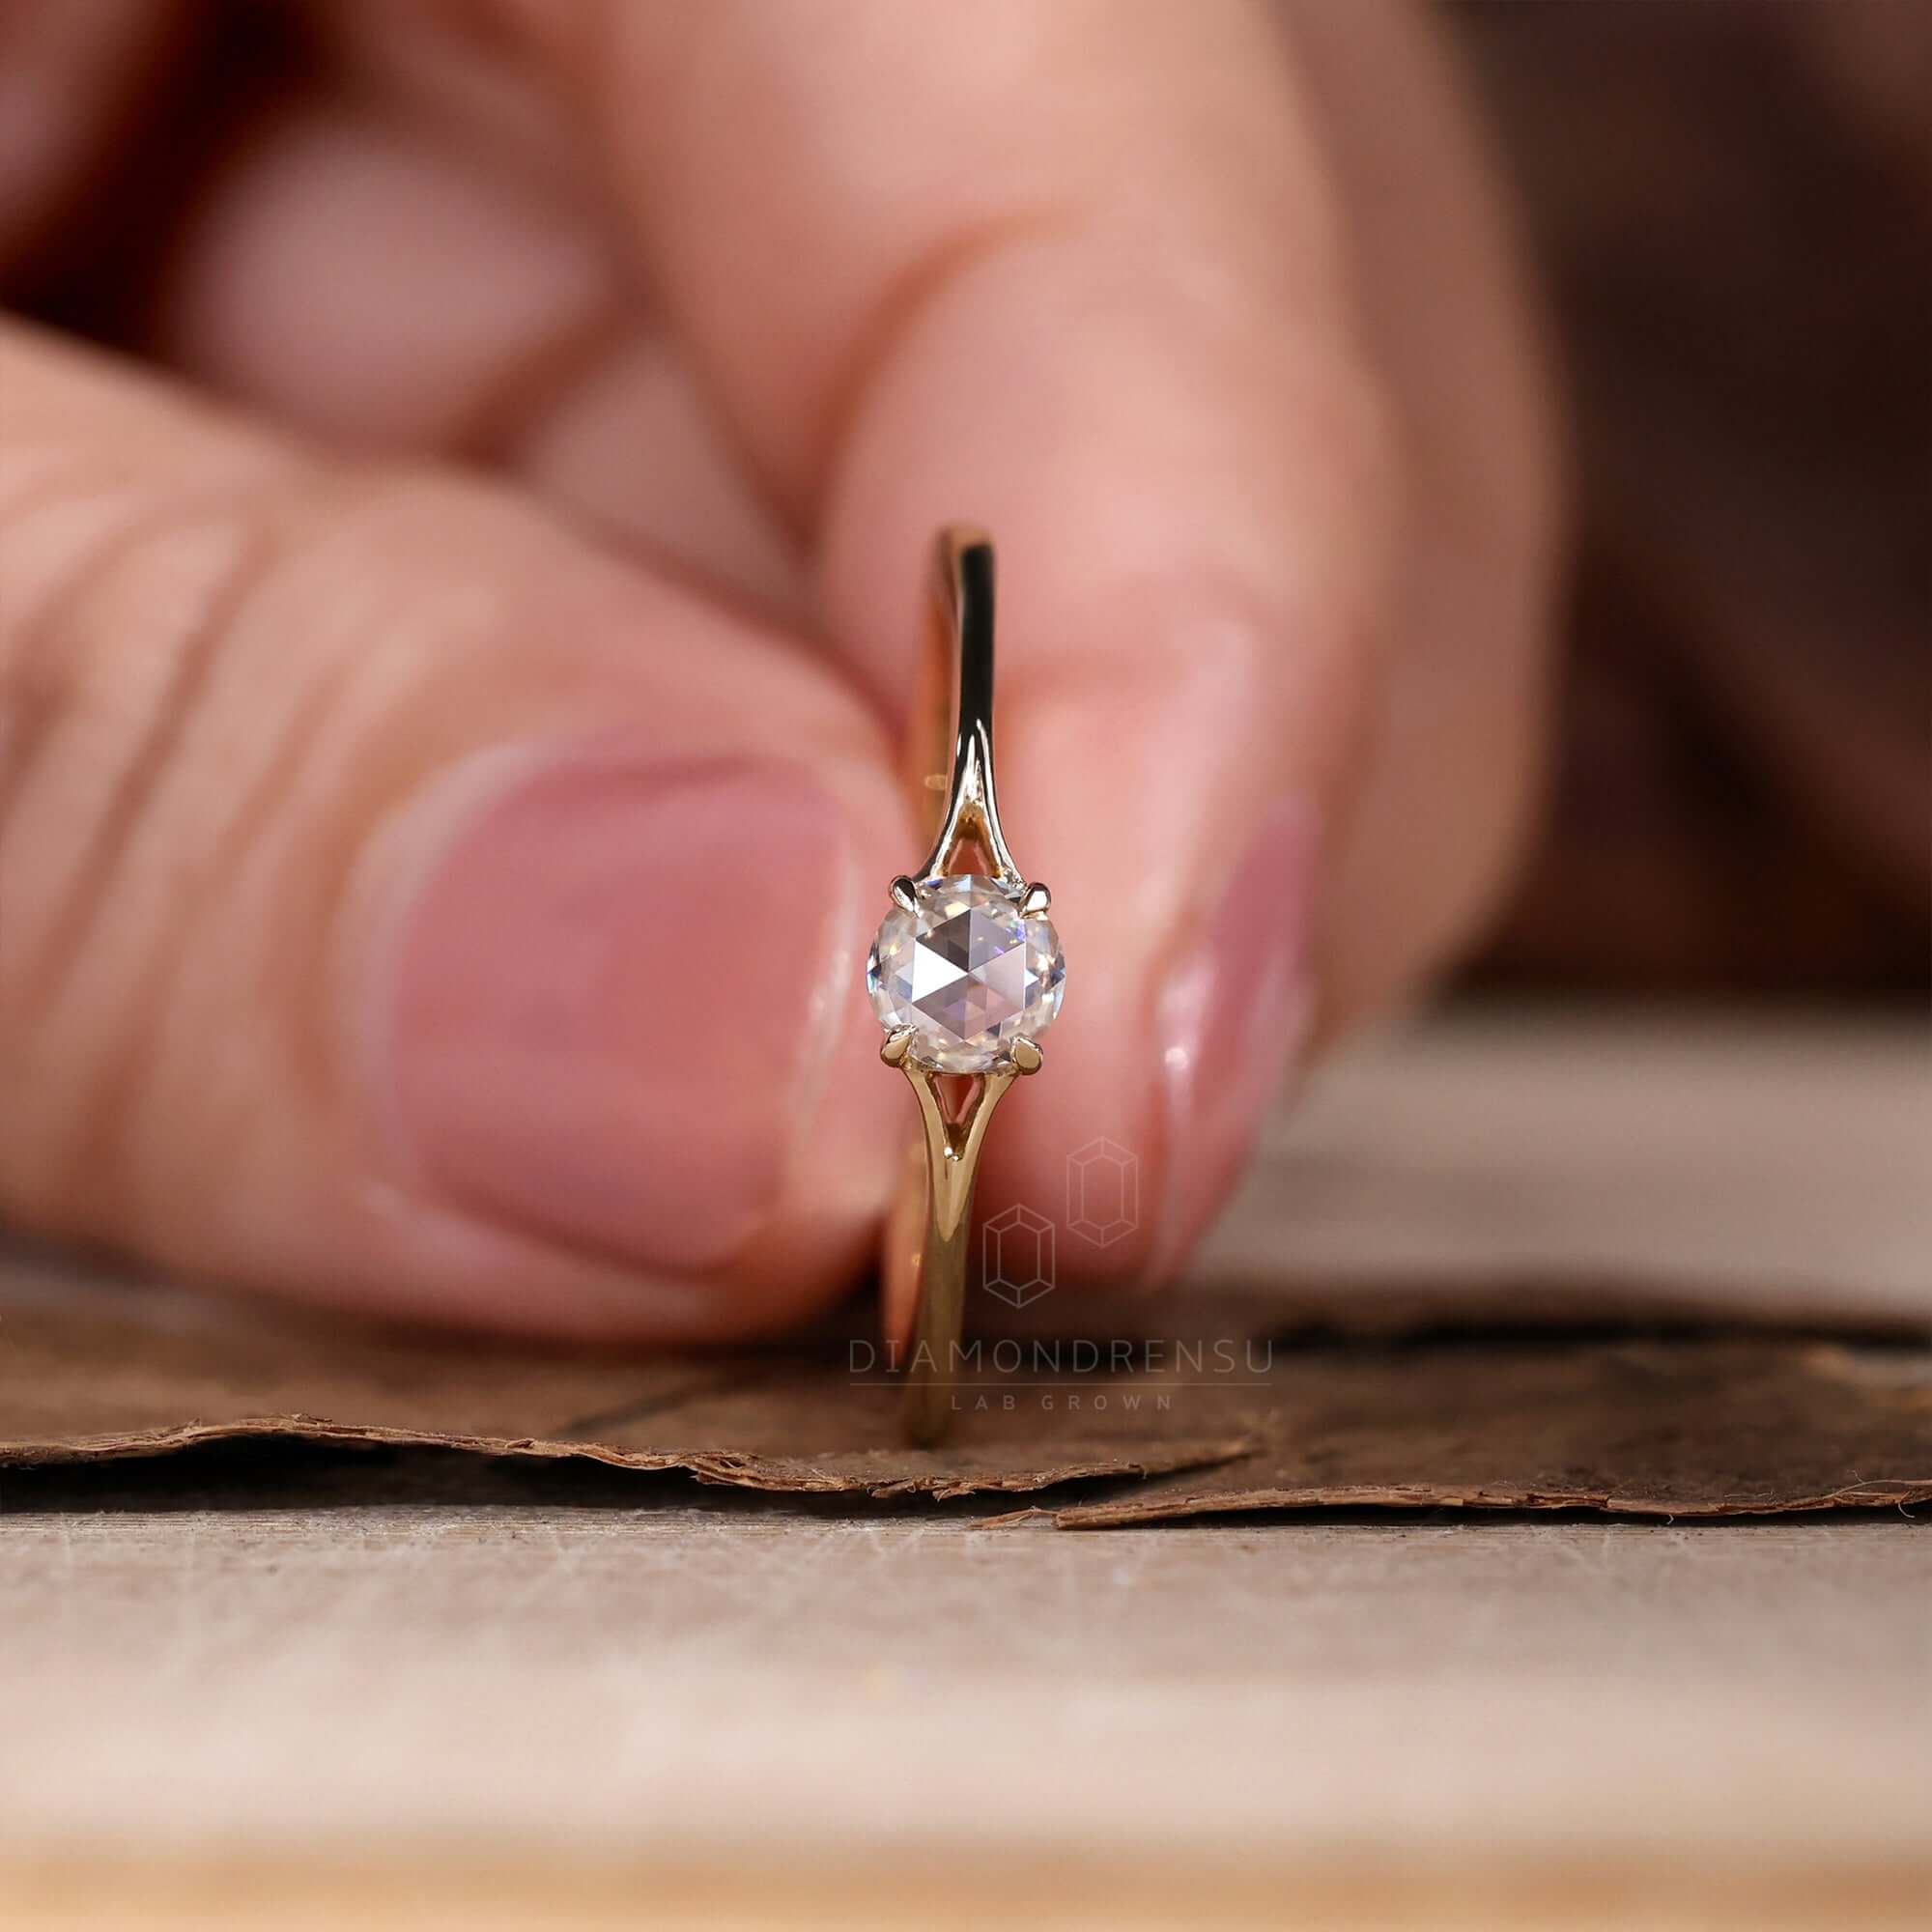 minimalist engagement ring - diamondrensu